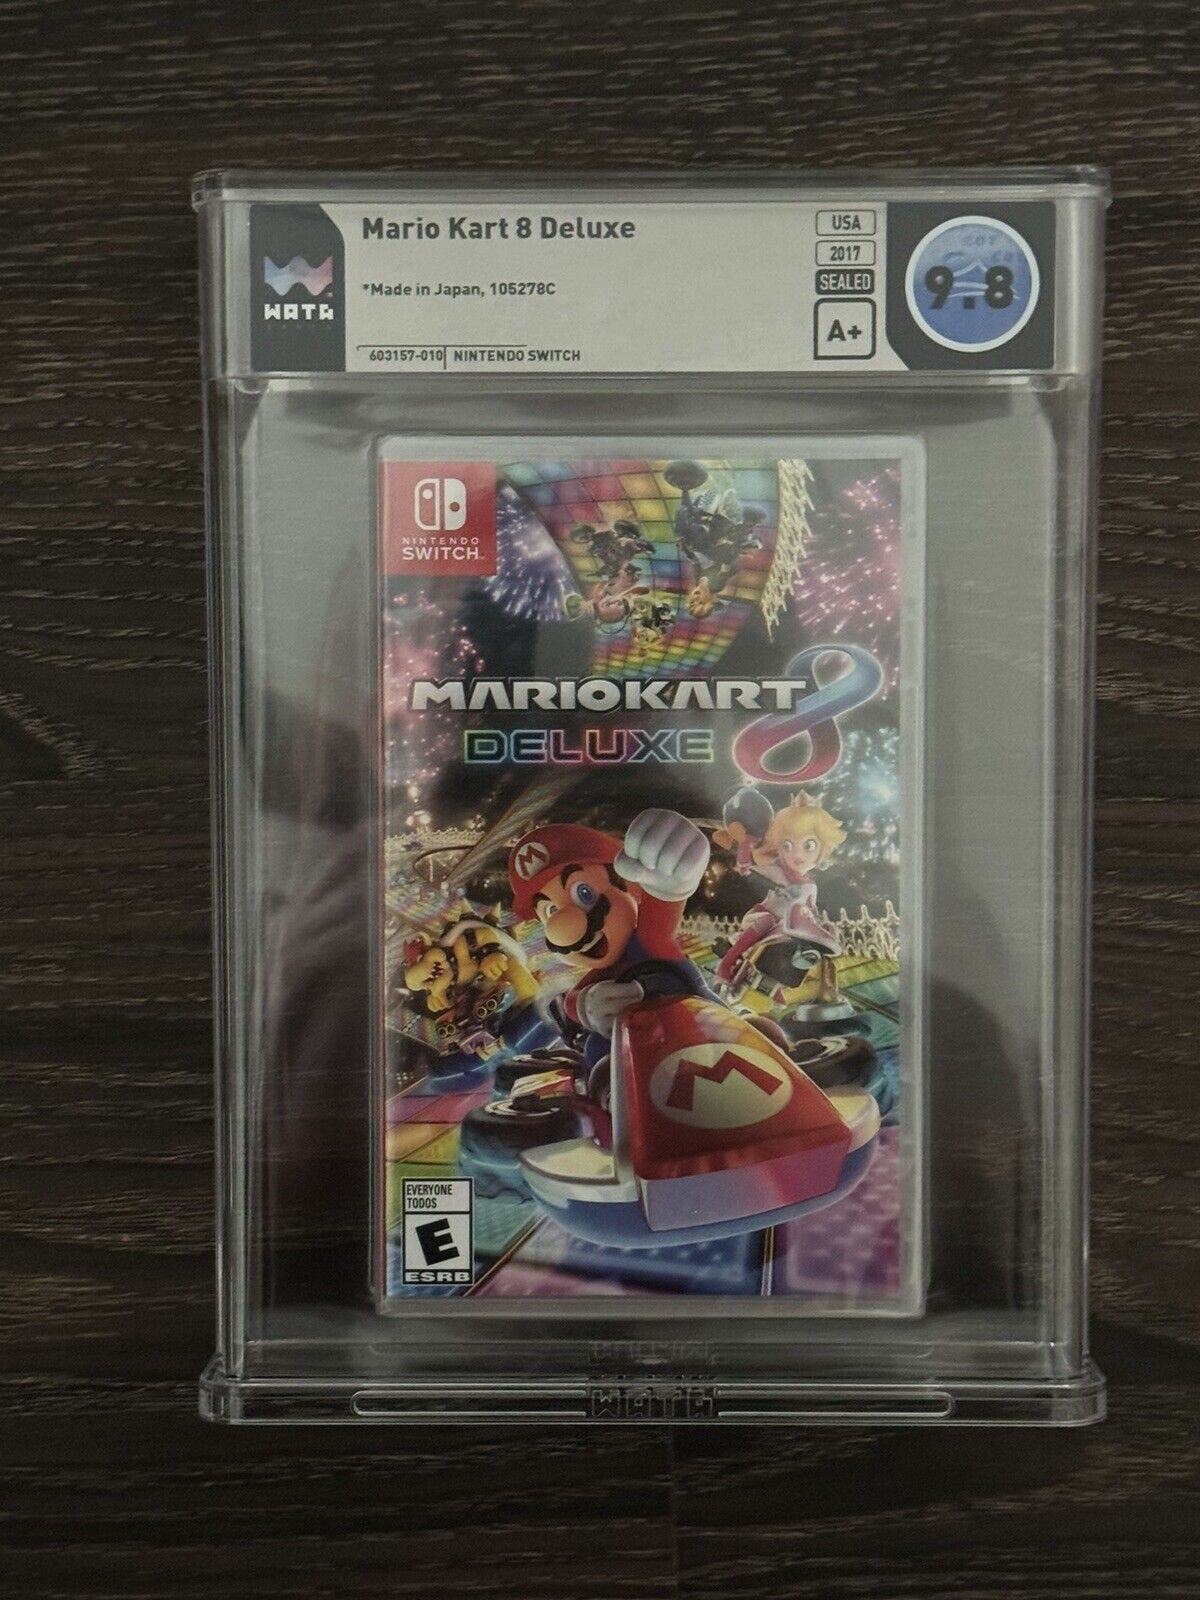 Nintendo Switch | Mario Kart 8 Deluxe | WATA Graded 9.8 A+ | Sealed Mint CGC VGA